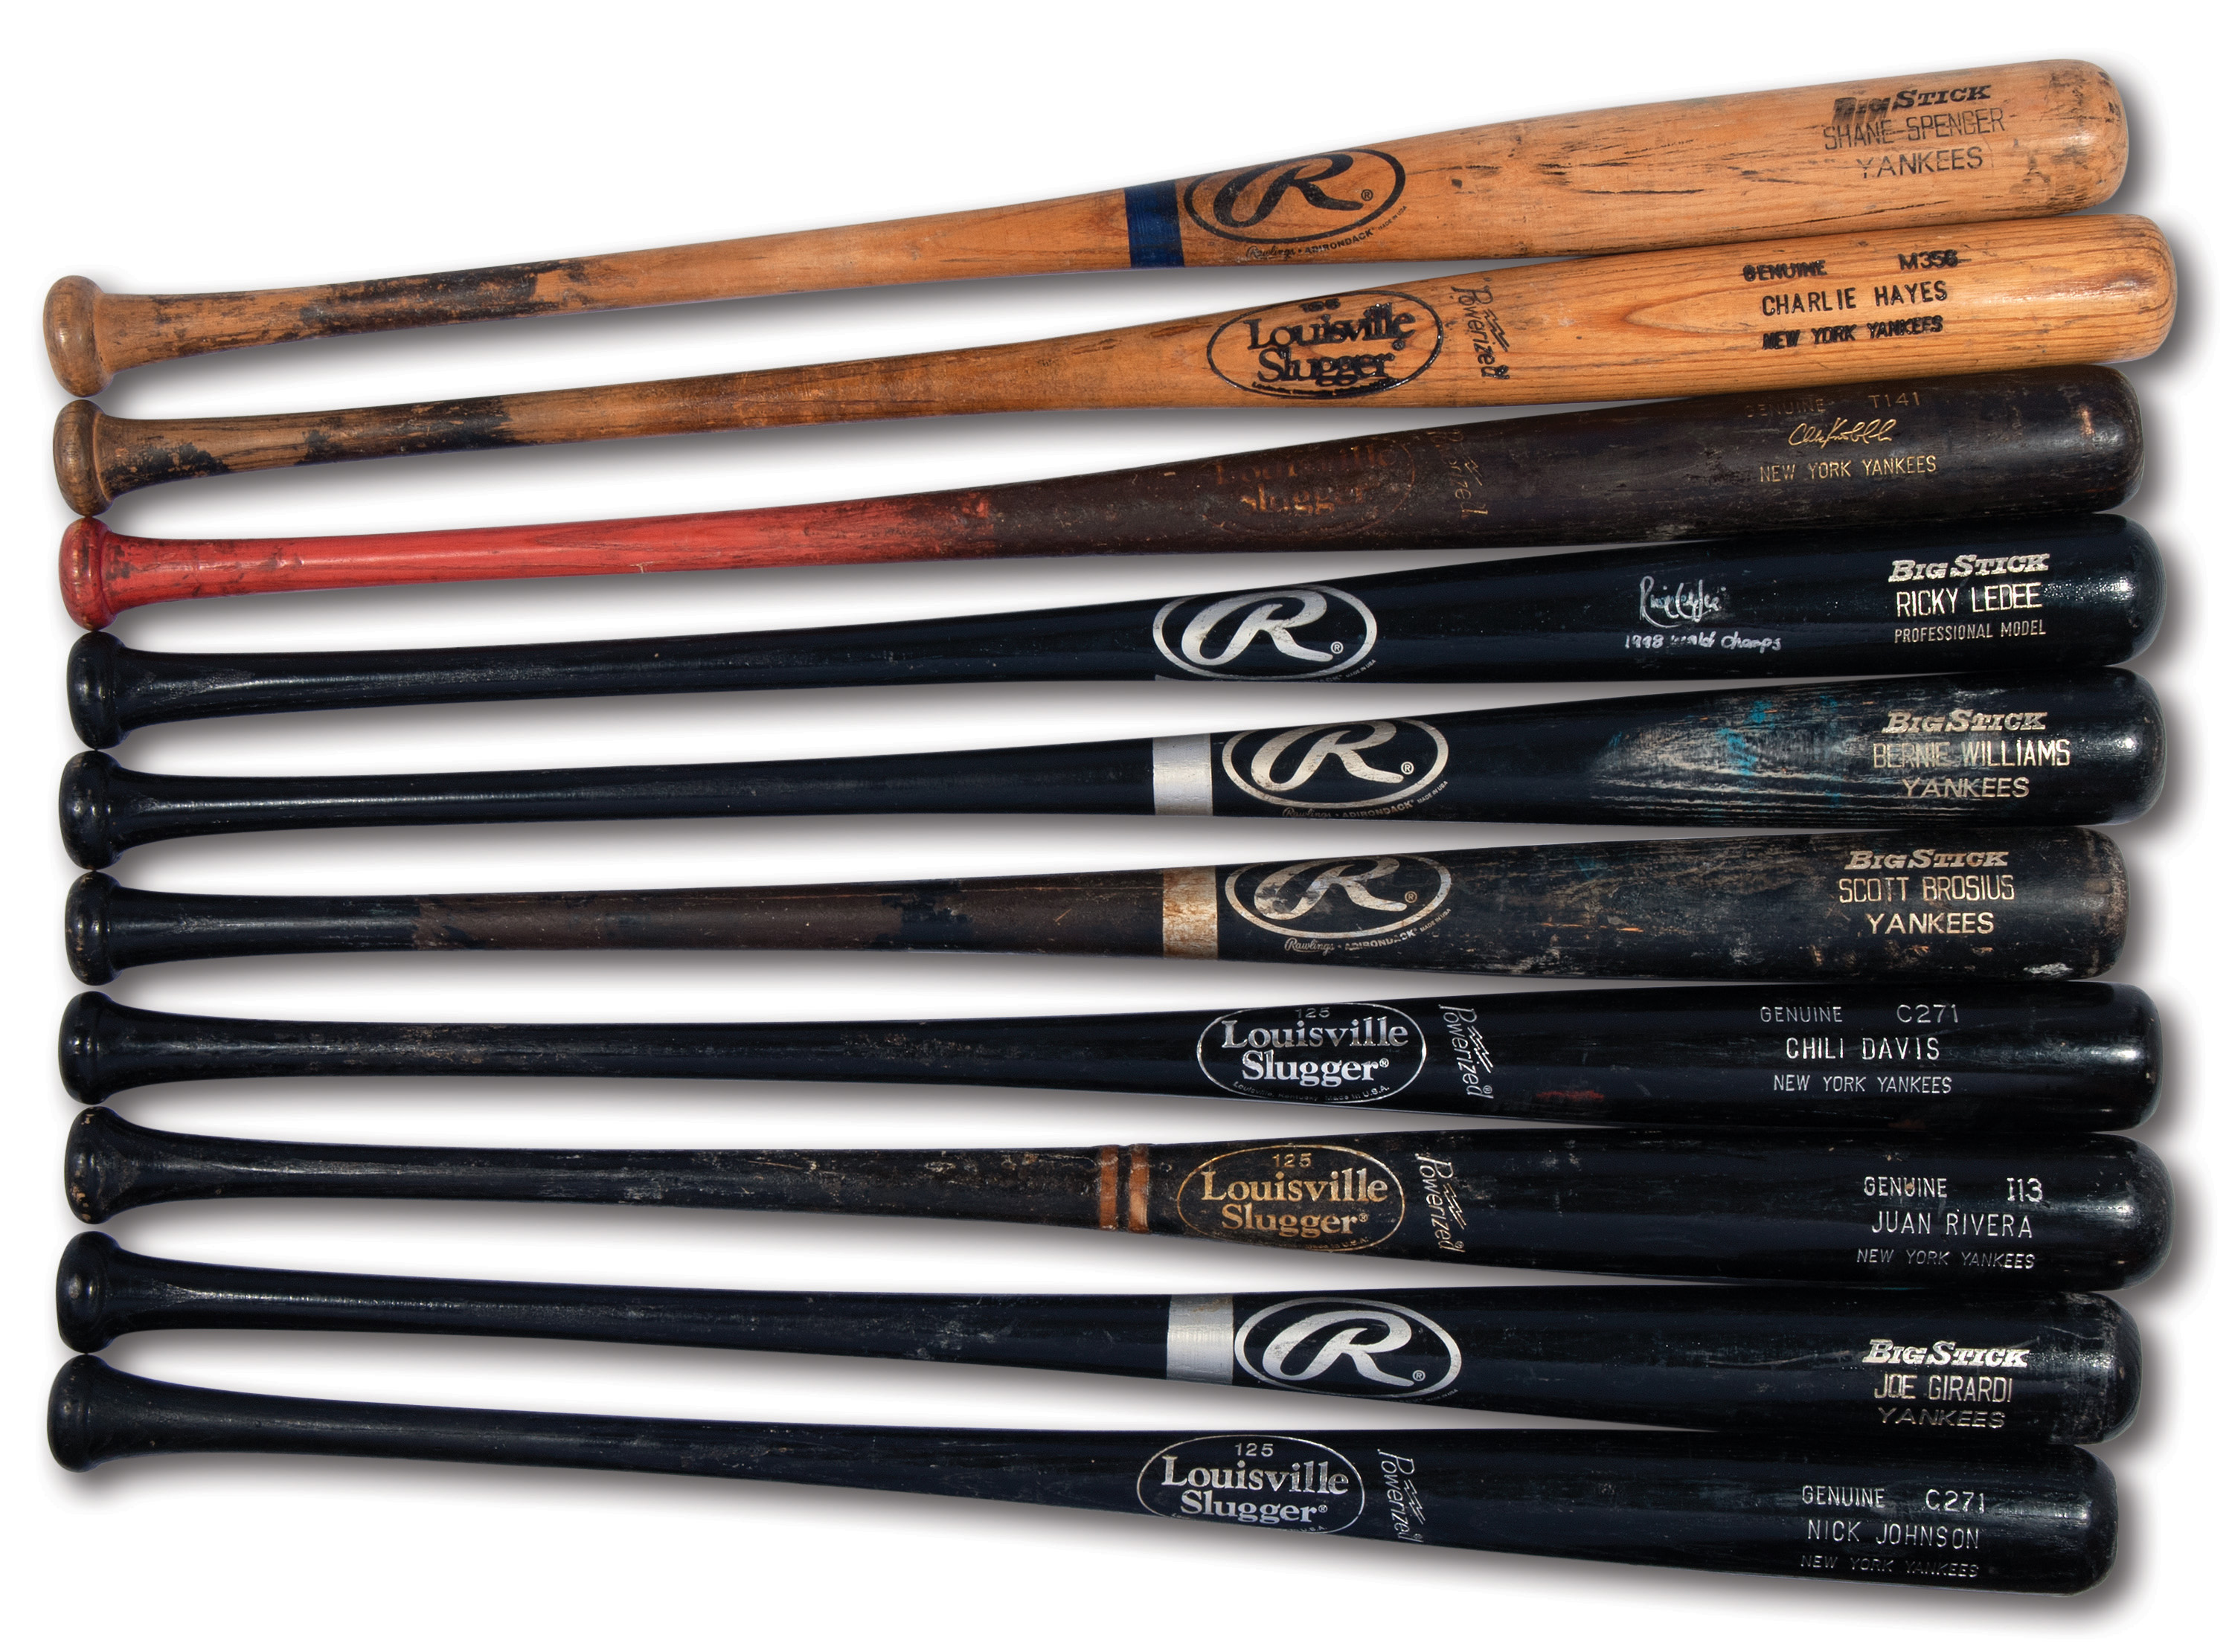 Bernie Williams Game-Used Big Stick Player Model Baseball Bat